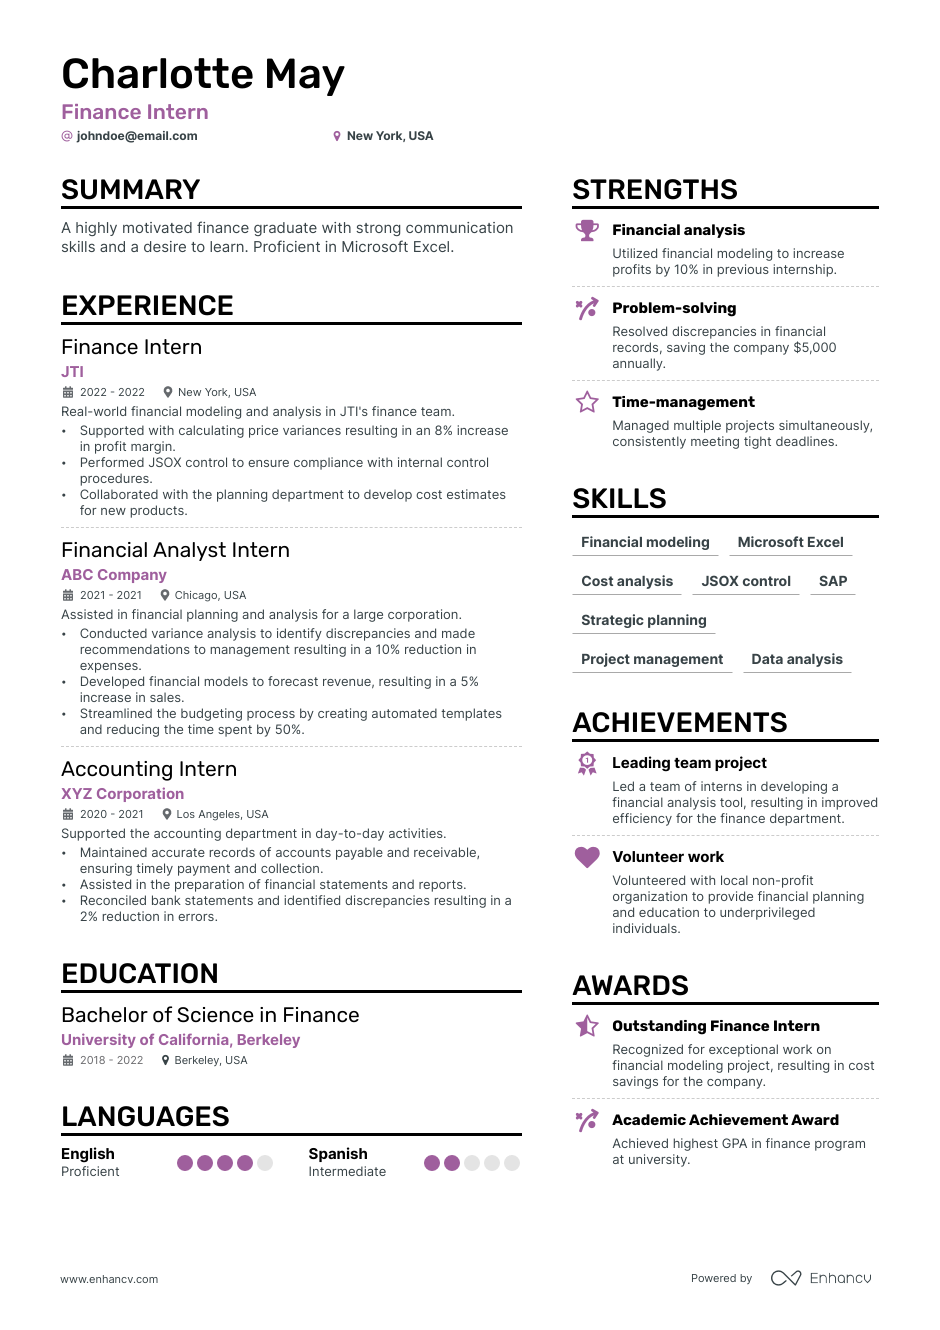 Finance Intern resume example